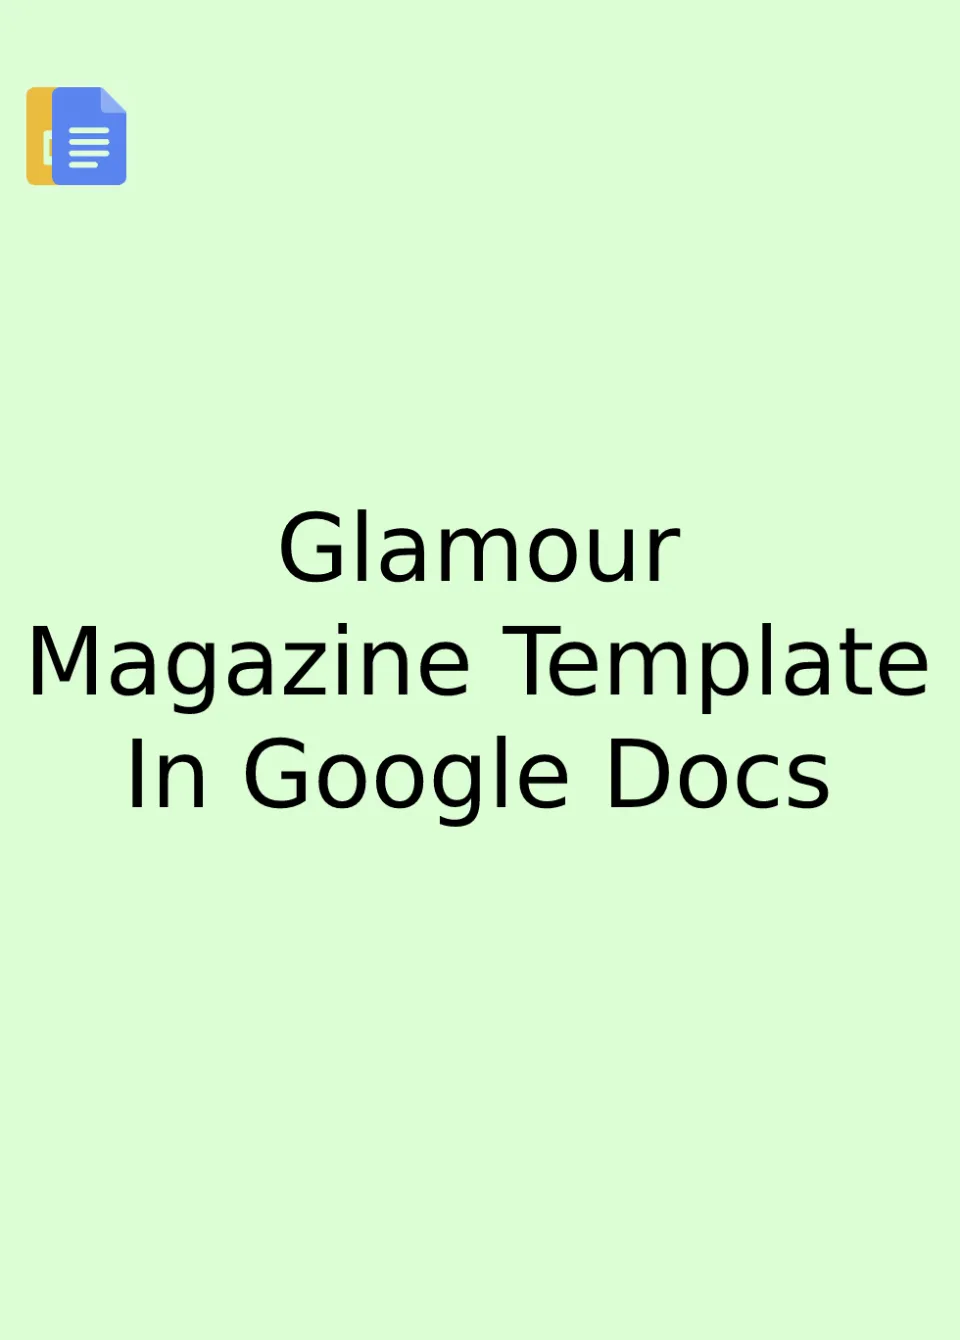 Glamour Magazine Template